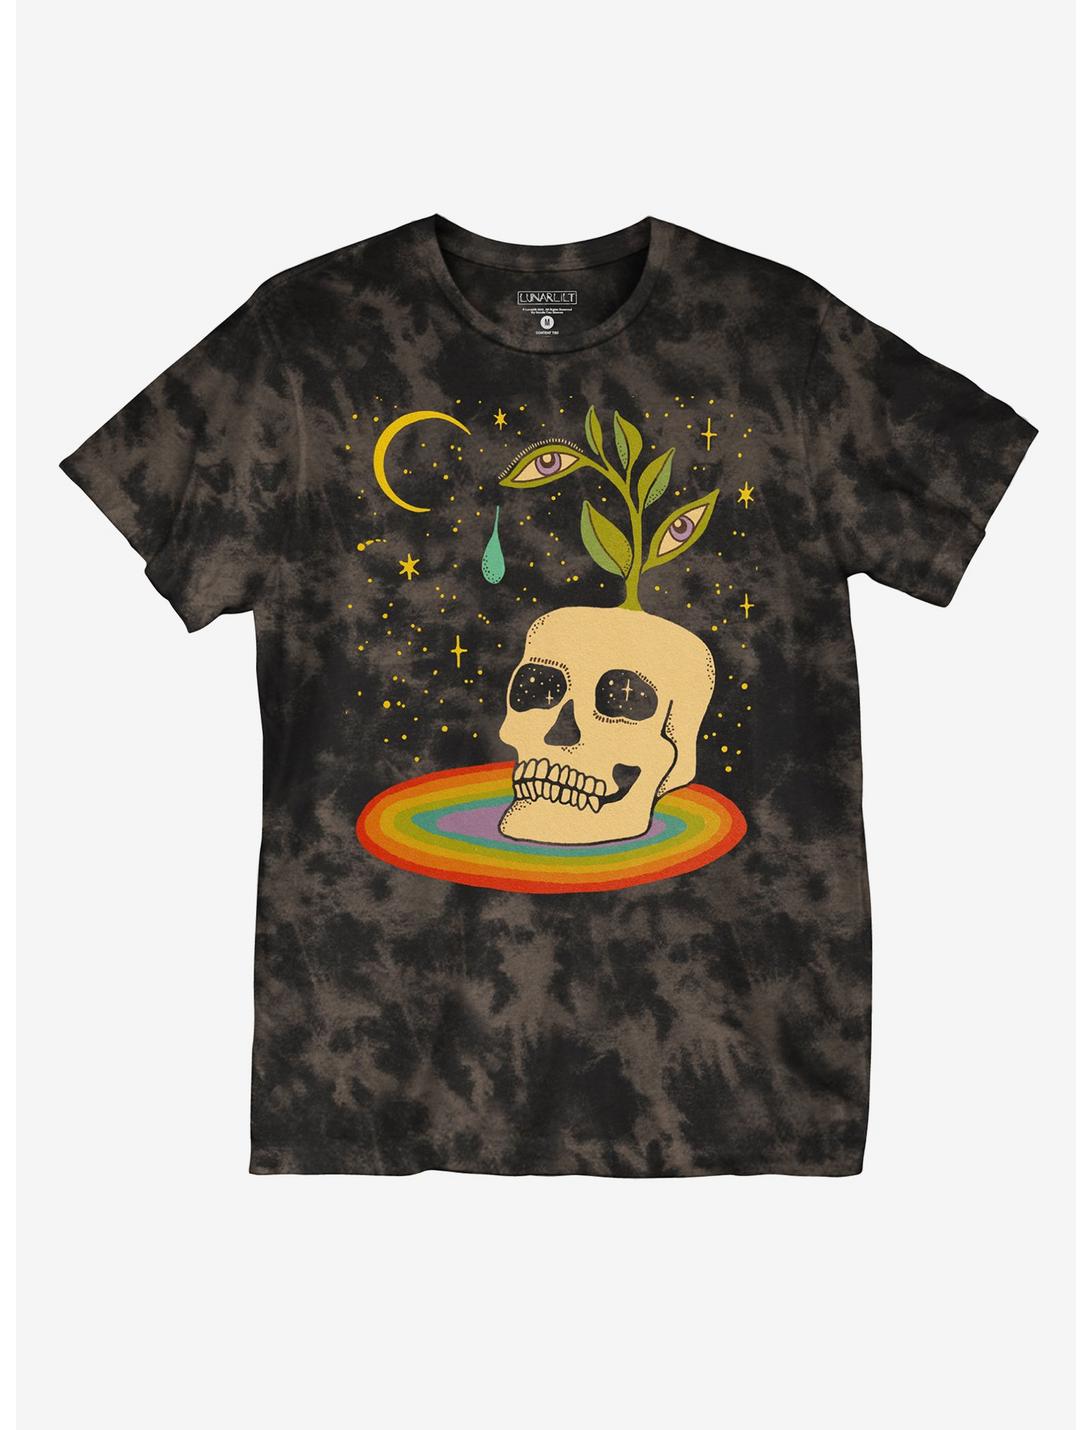 Sprouting Skull Tie-Dye Boyfriend Fit Girls T-Shirt By Lunarlilt, MULTI, hi-res